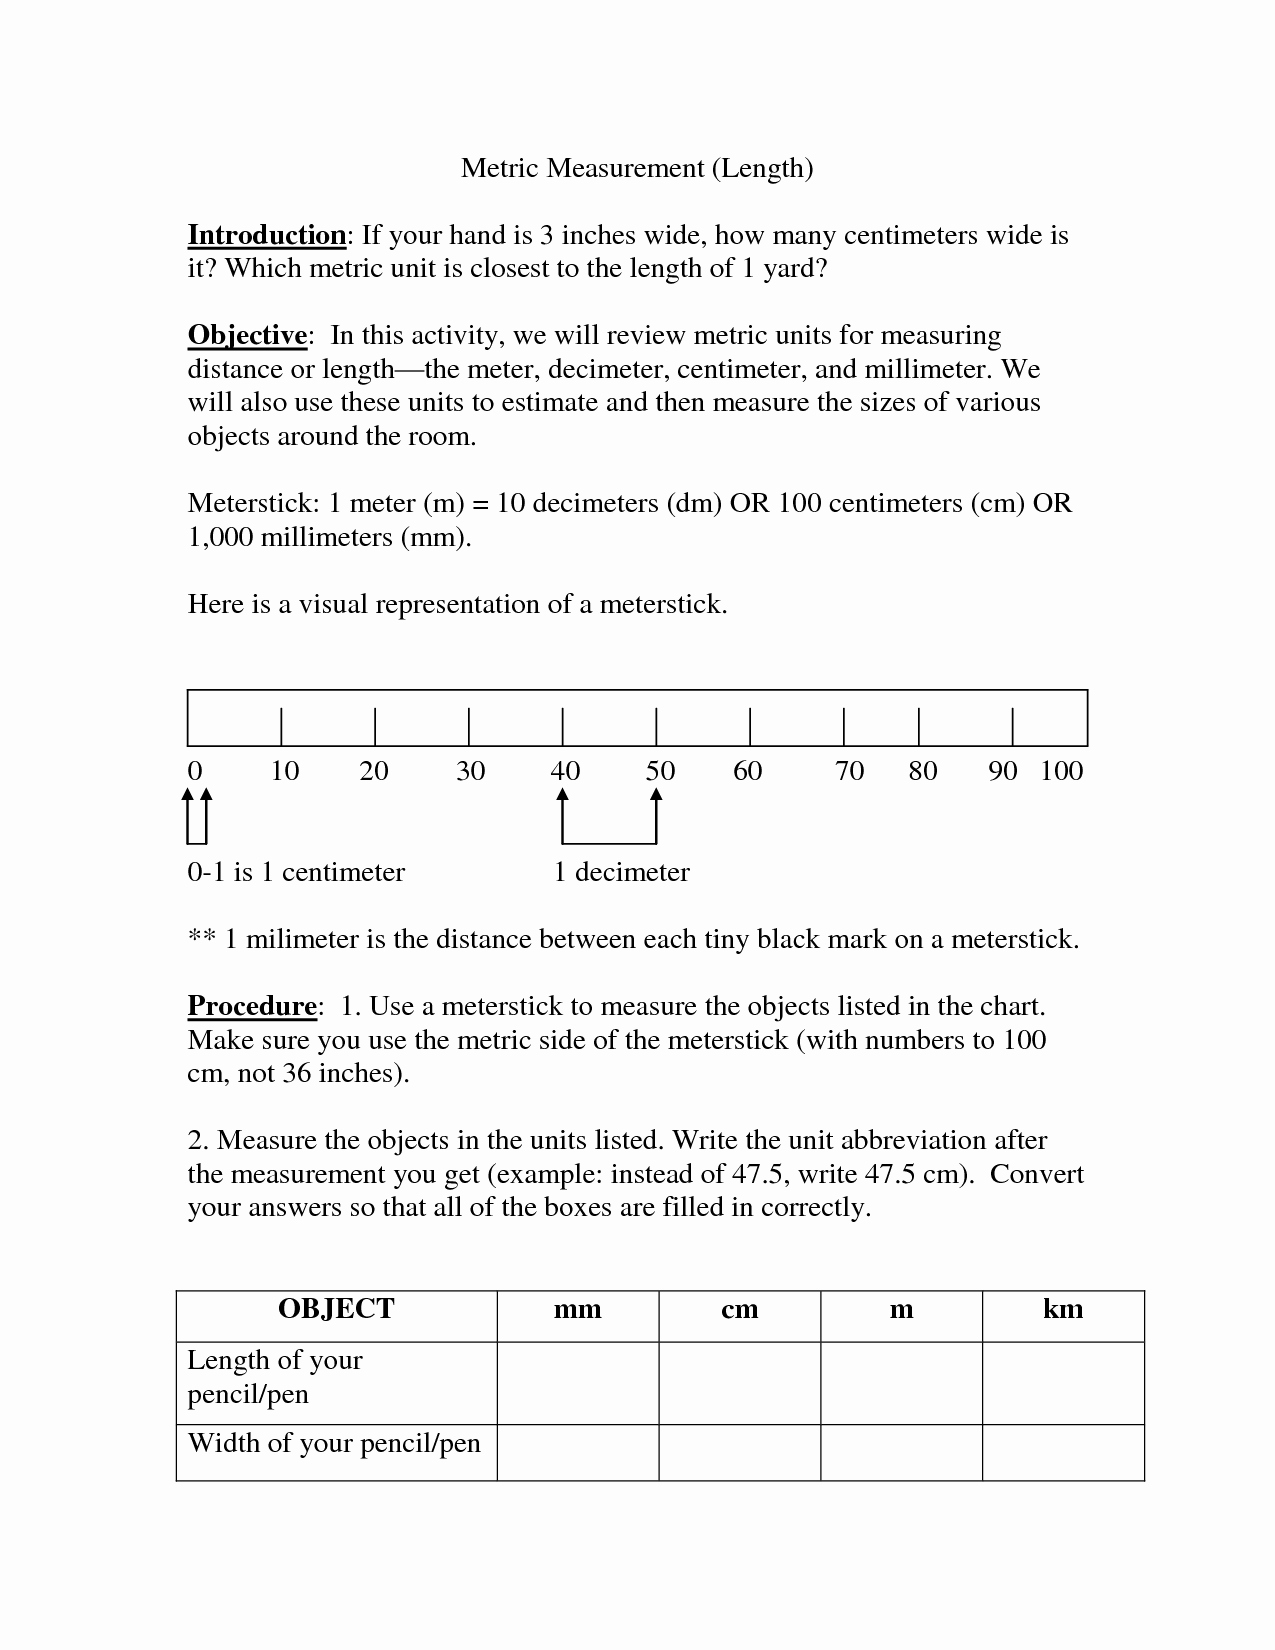 English to Metric Conversion Worksheet Lovely Metric to English Conversion Worksheet the Best Worksheets